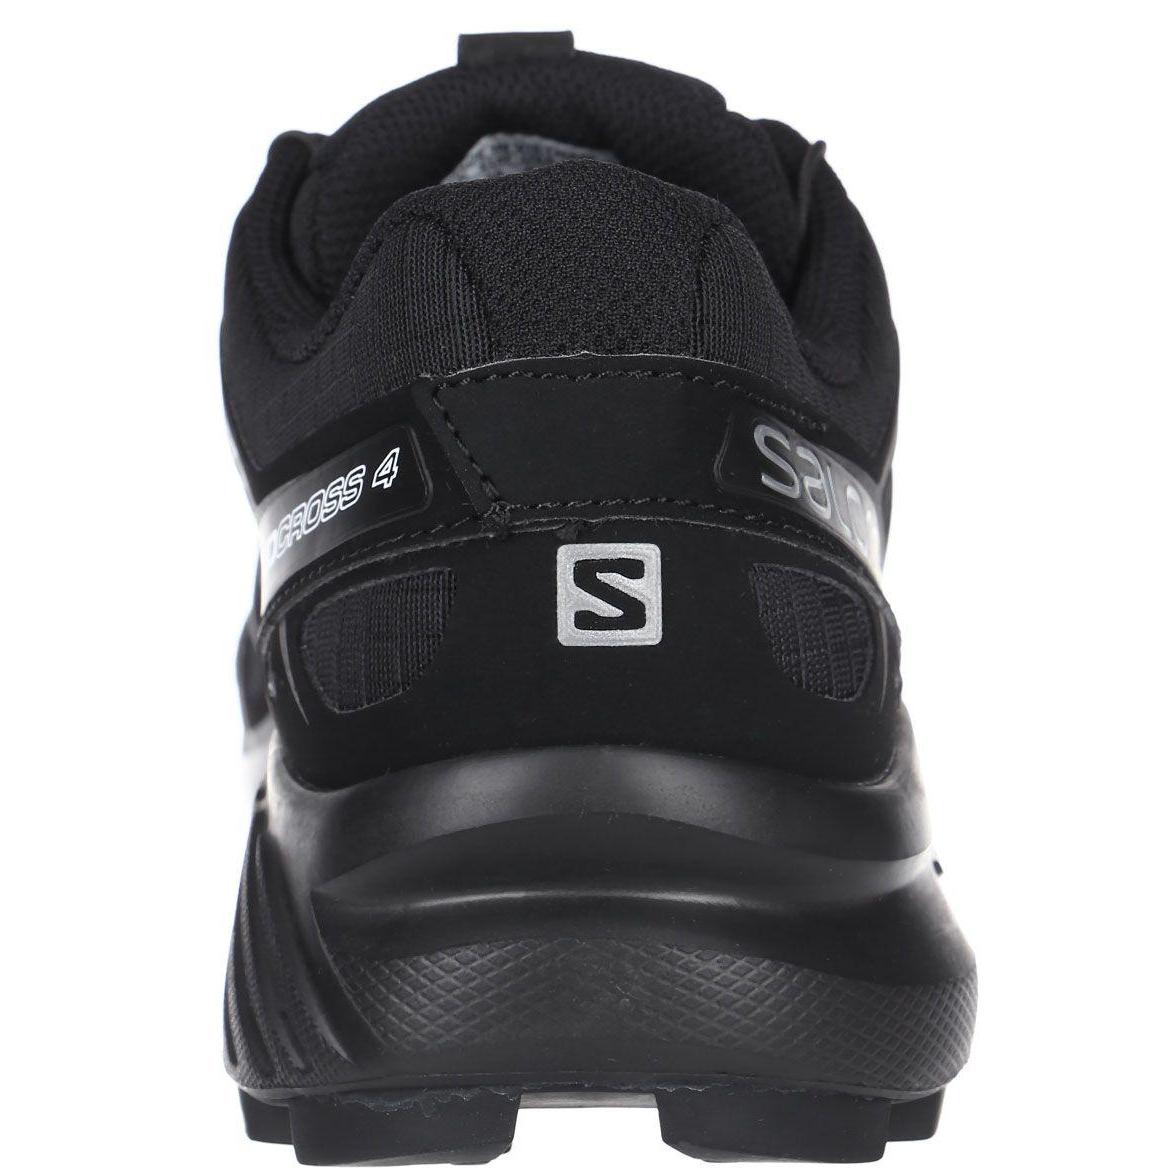 Беговые кроссовки для XC Salomon 2019 Speedcross 4 W Black/Black/Black Metallic